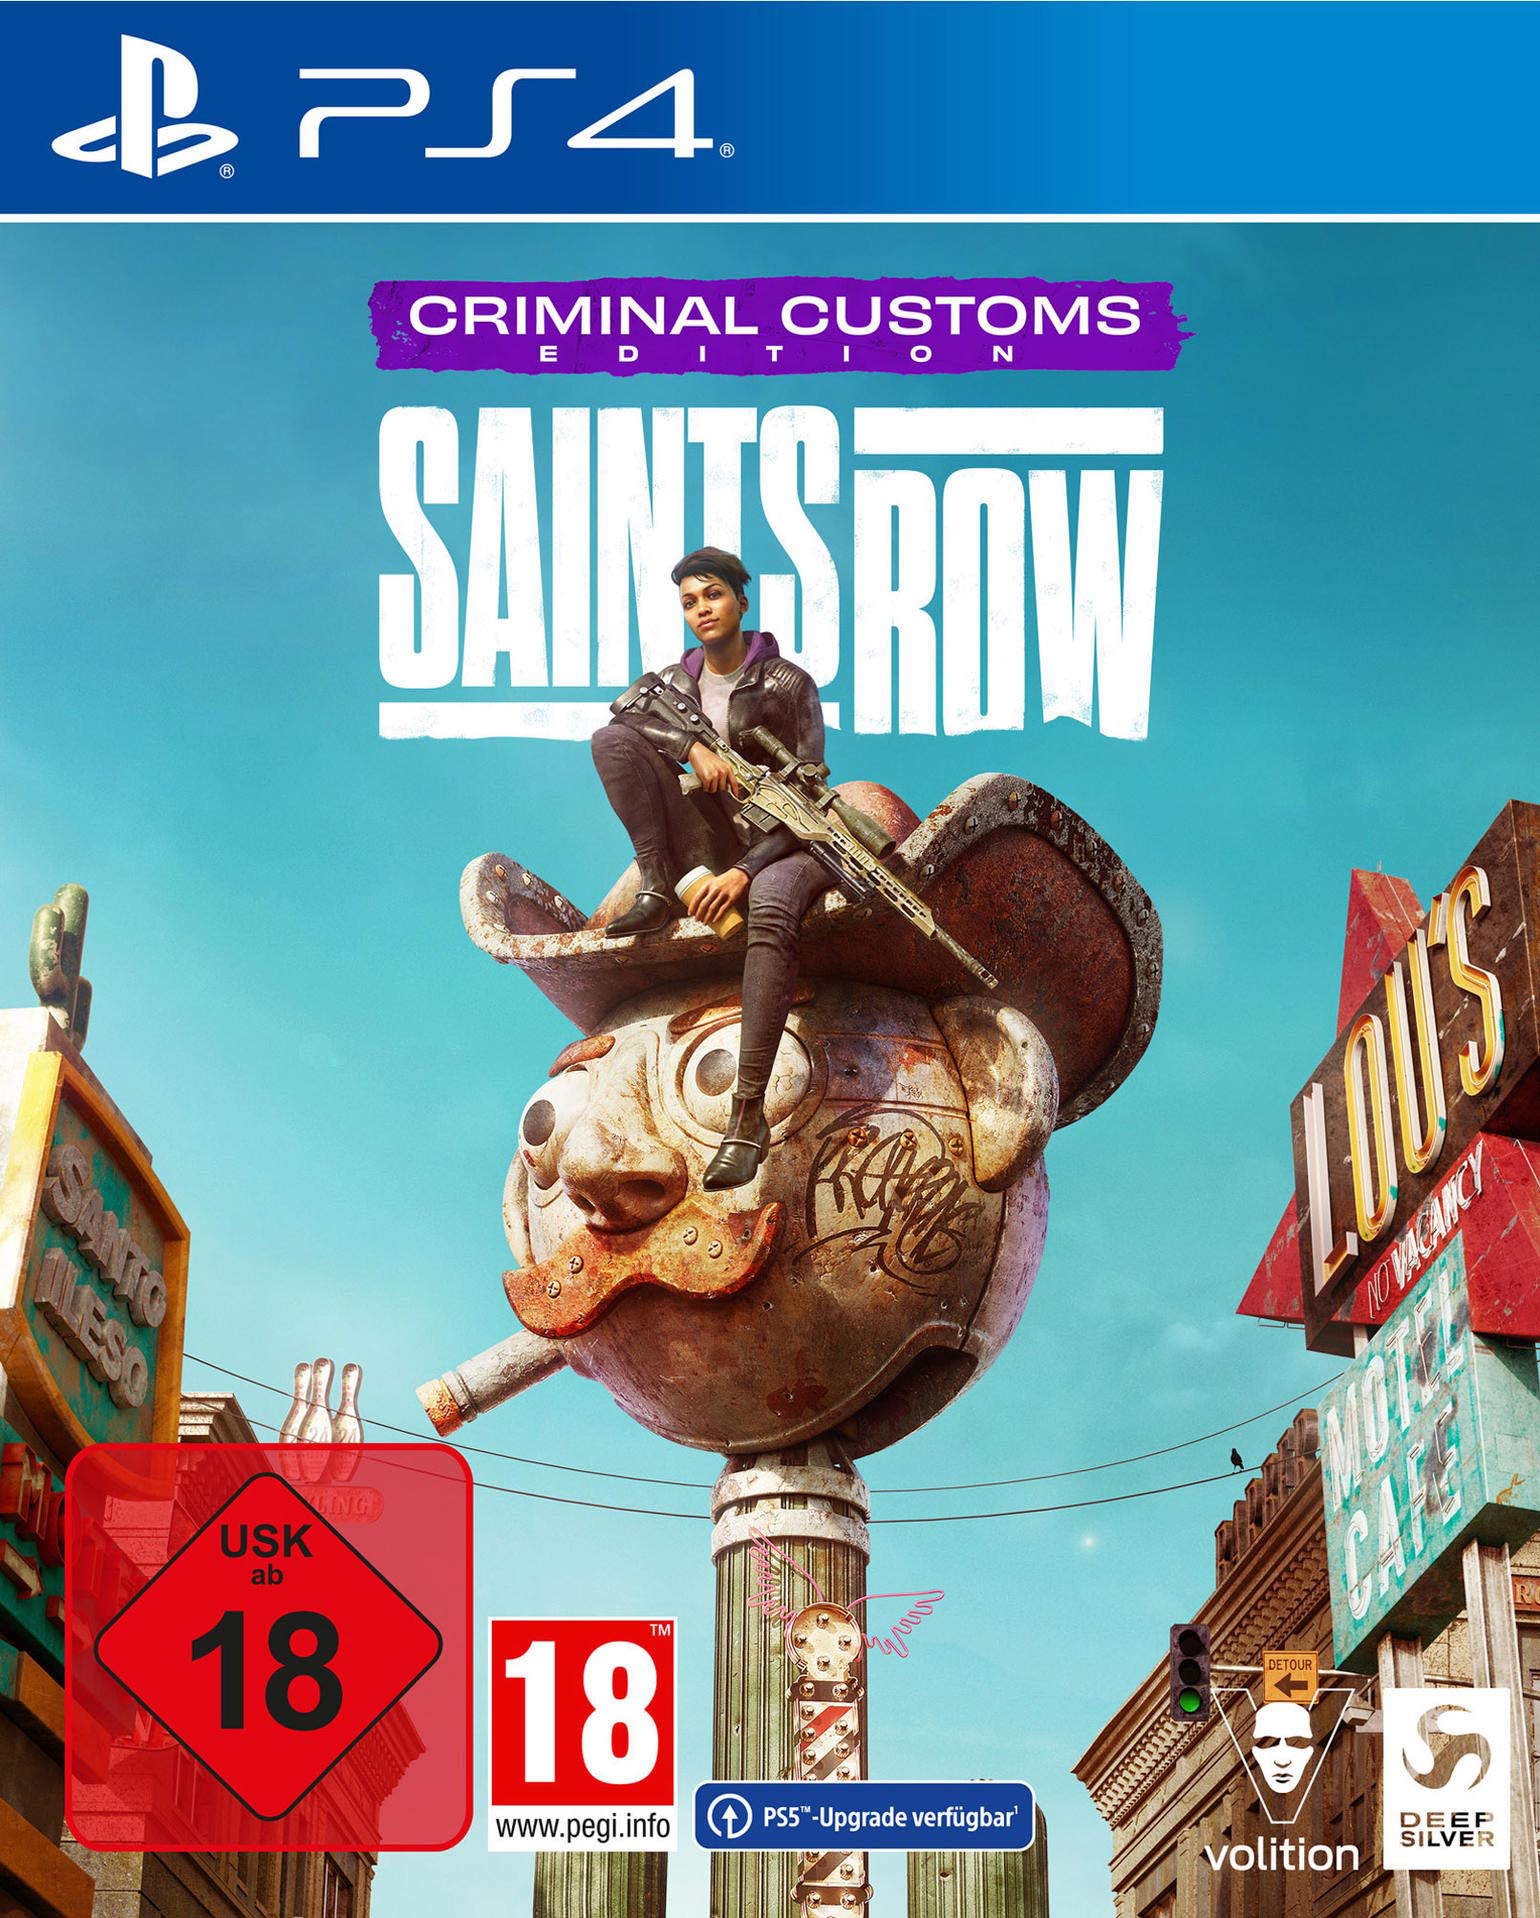 [PlayStation ROW 4] CUSTOMS - CRIMINAL PS4 EDITION SAINTS